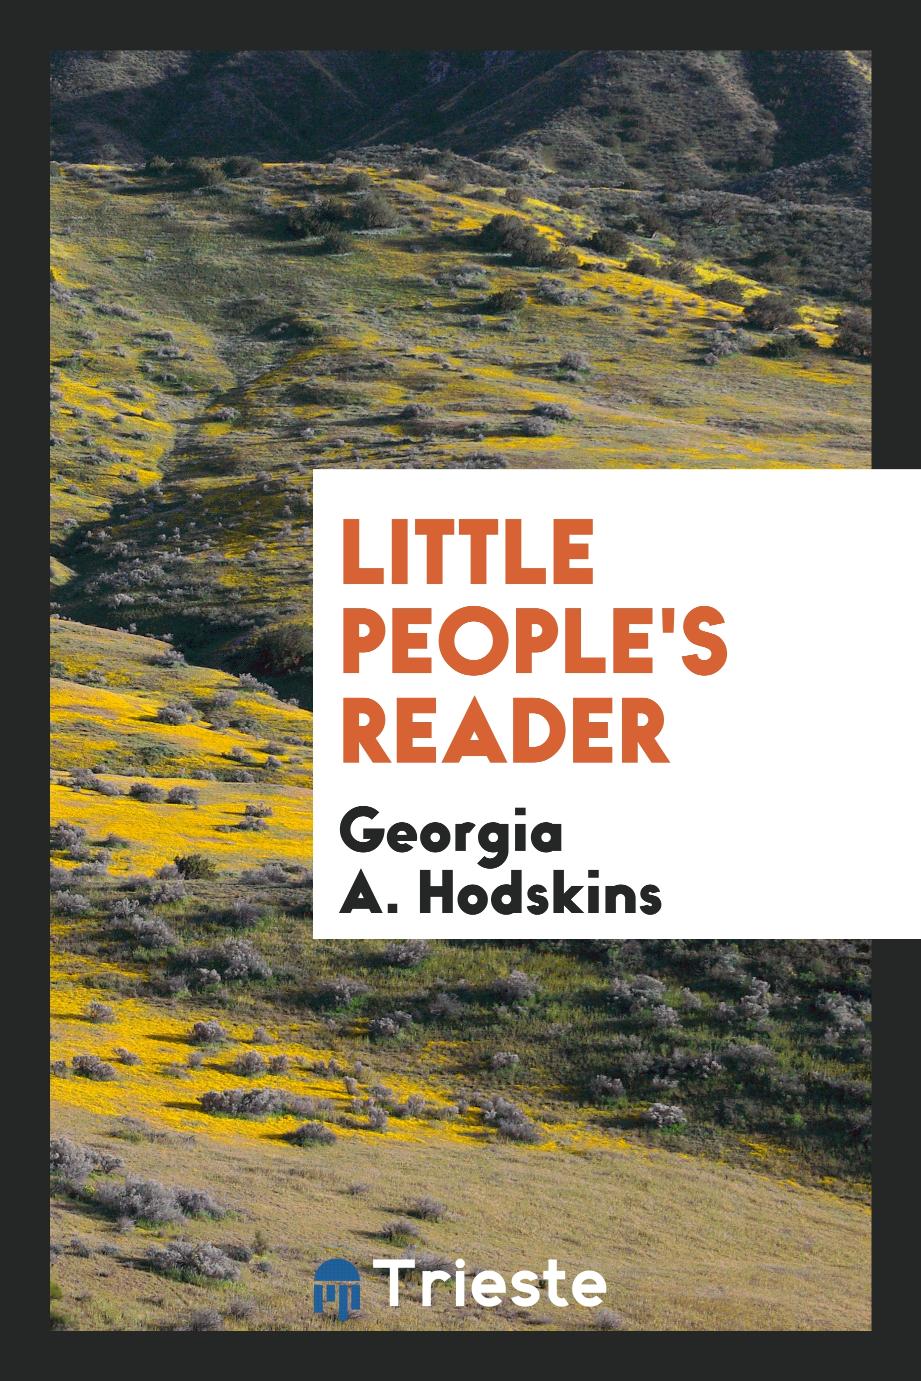 Little People's Reader